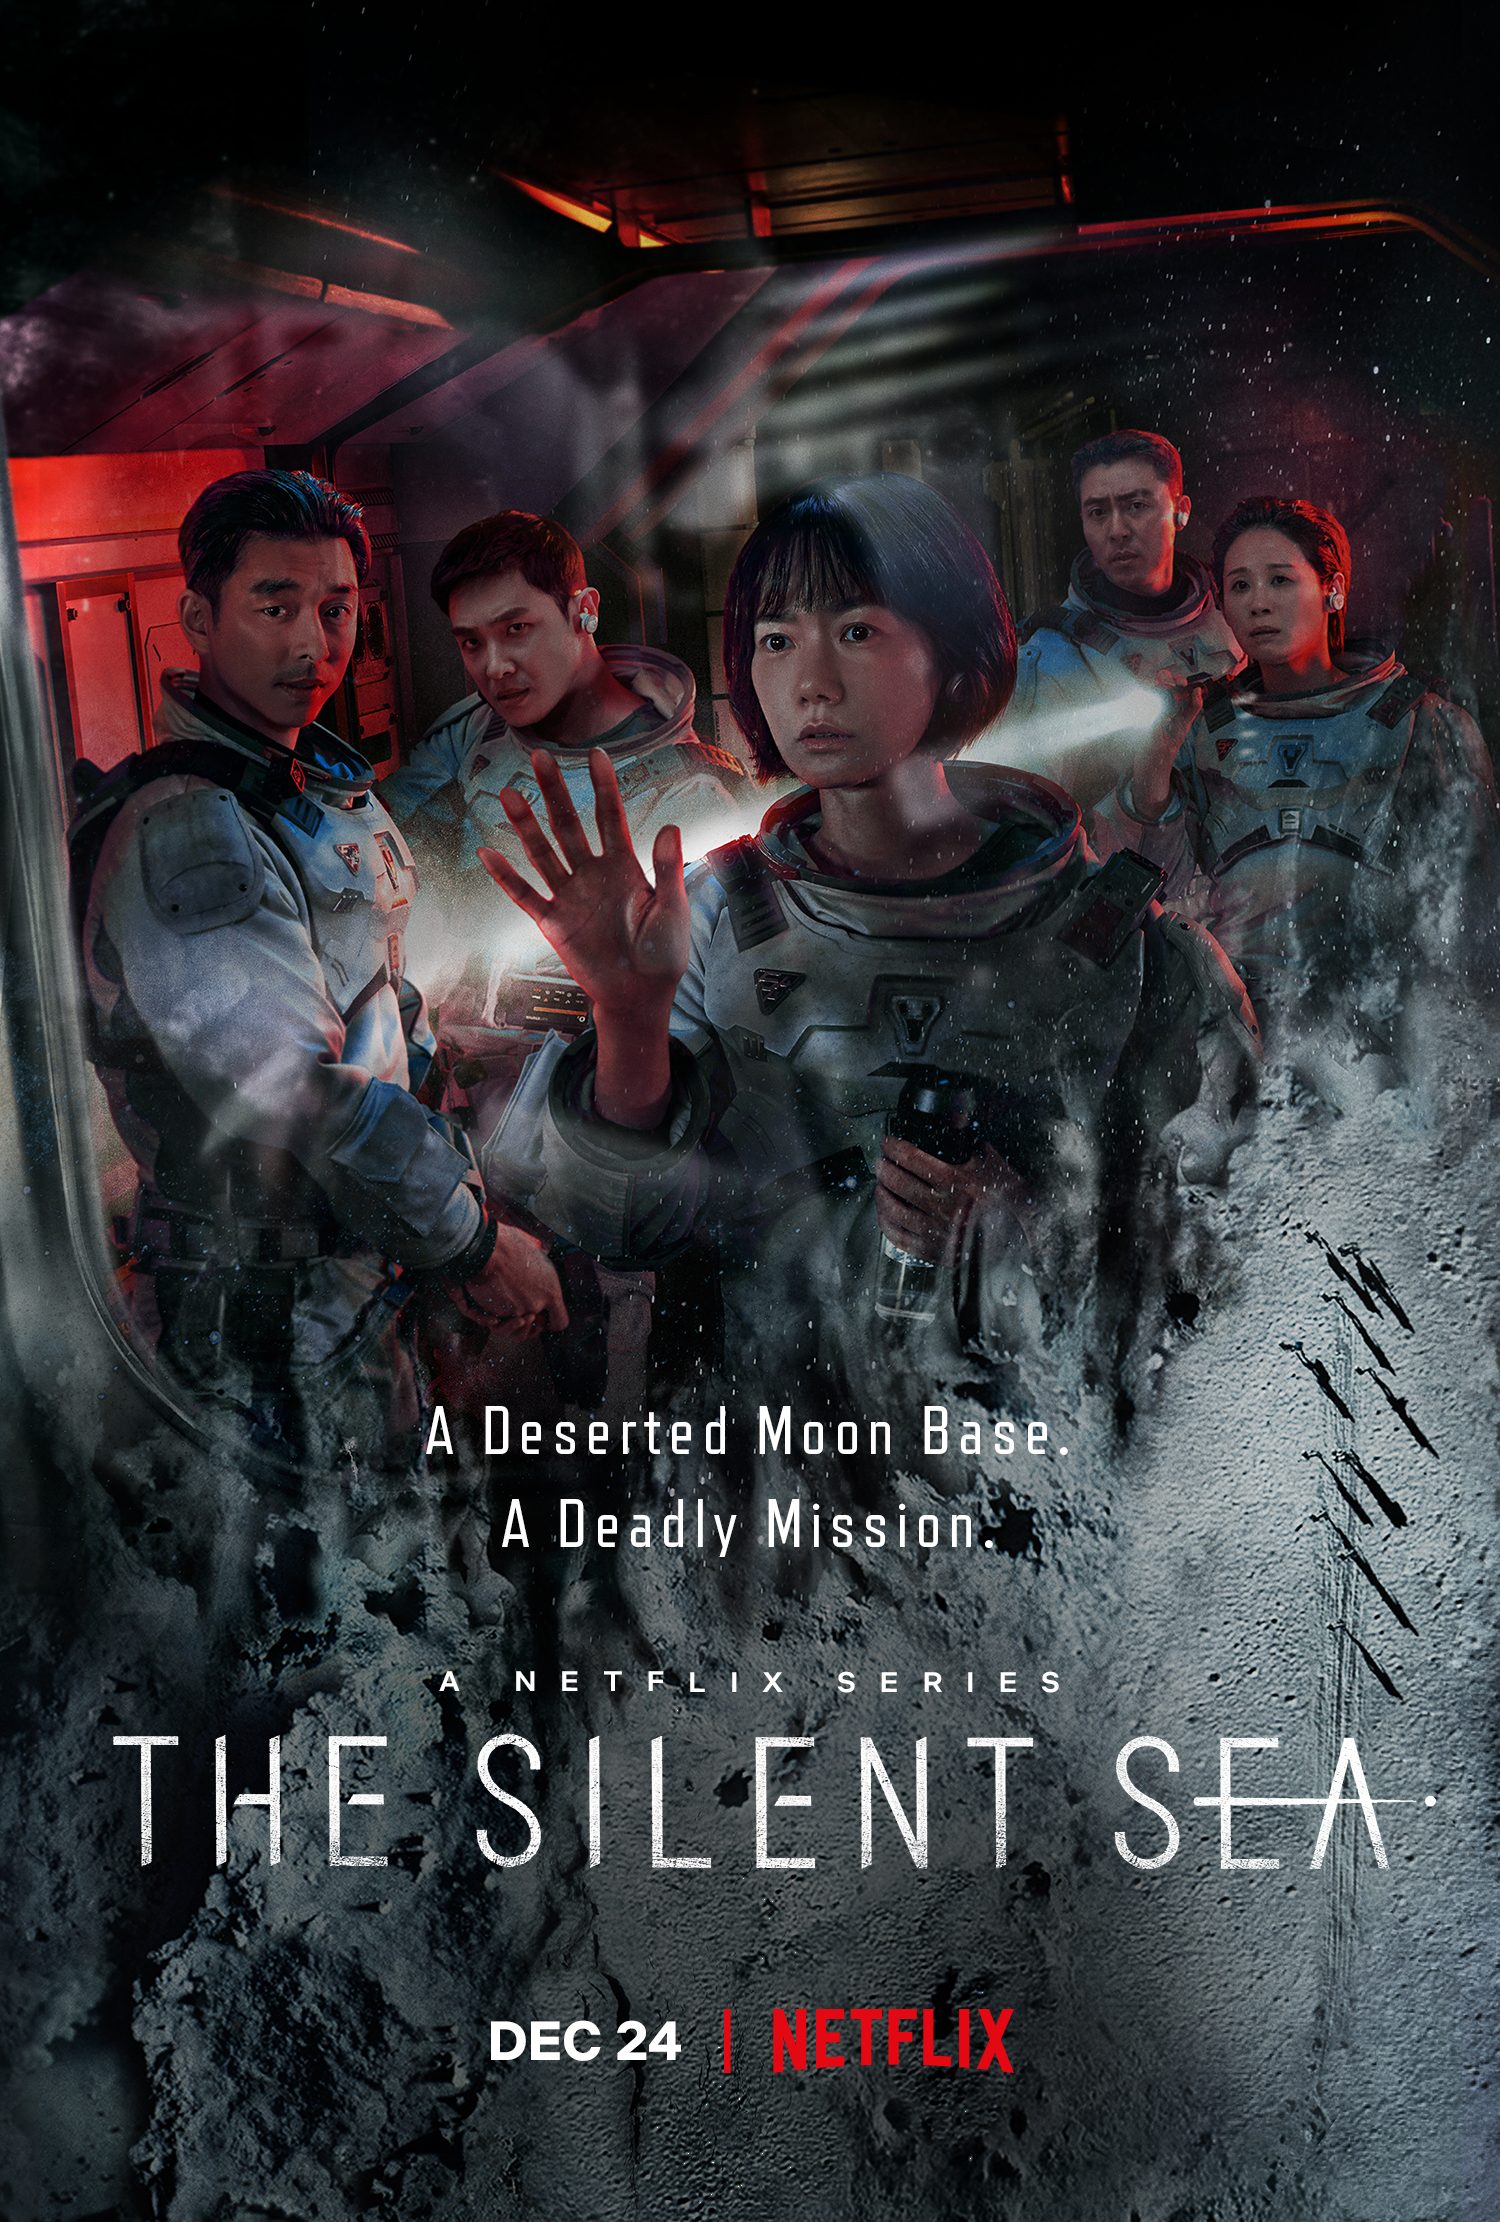 Bae Doona Loves A Challenge. 'The Silent Sea' Is Her Ultimate Voyage -  Netflix Tudum